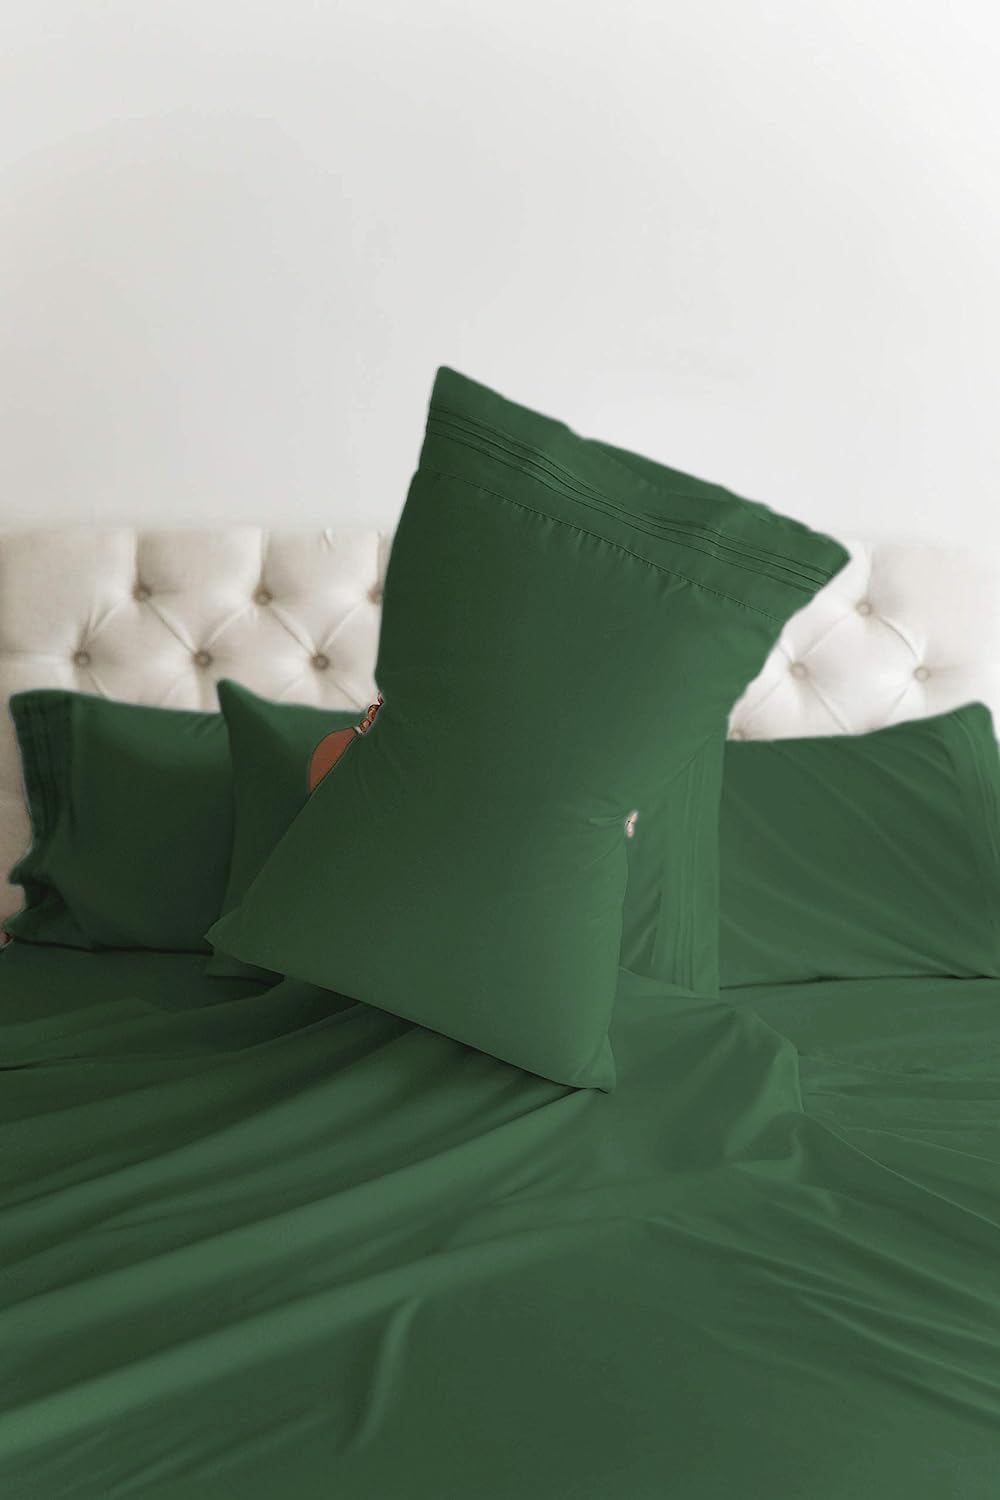 tes 4 Piece Deep Pocket Sheet Set New Colors - Emerald Green